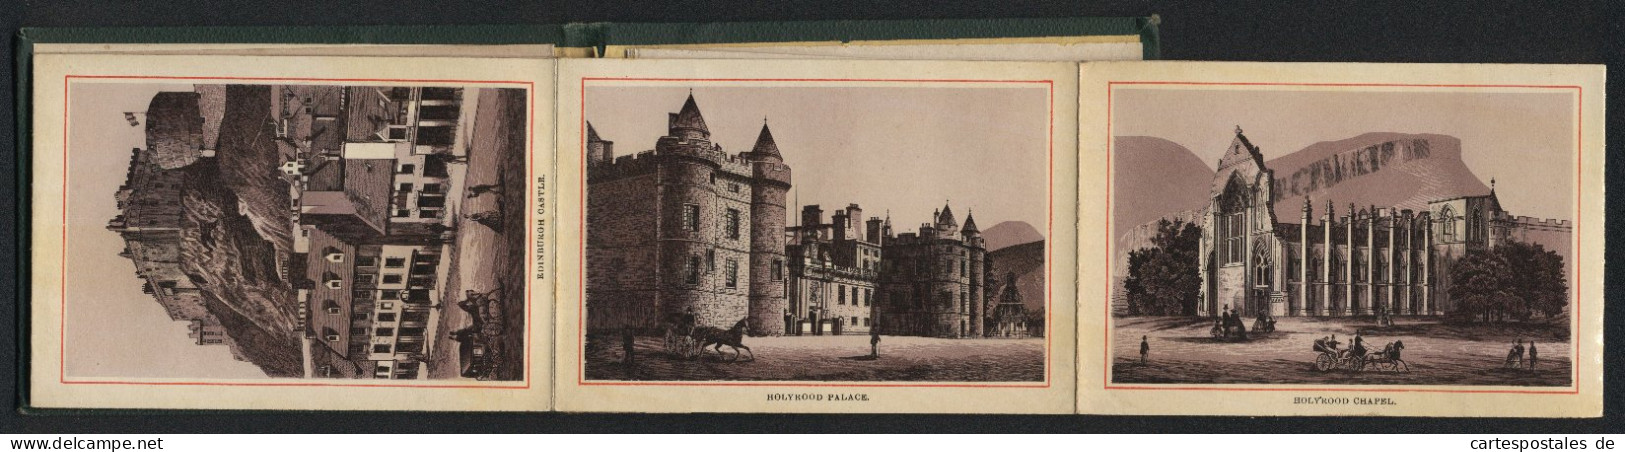 Leporello-Album Edinburgh Mit 12 Lithographie-Ansichten, Princes Street, Old Town, Scott Monument, John Knox House  - Lithografieën